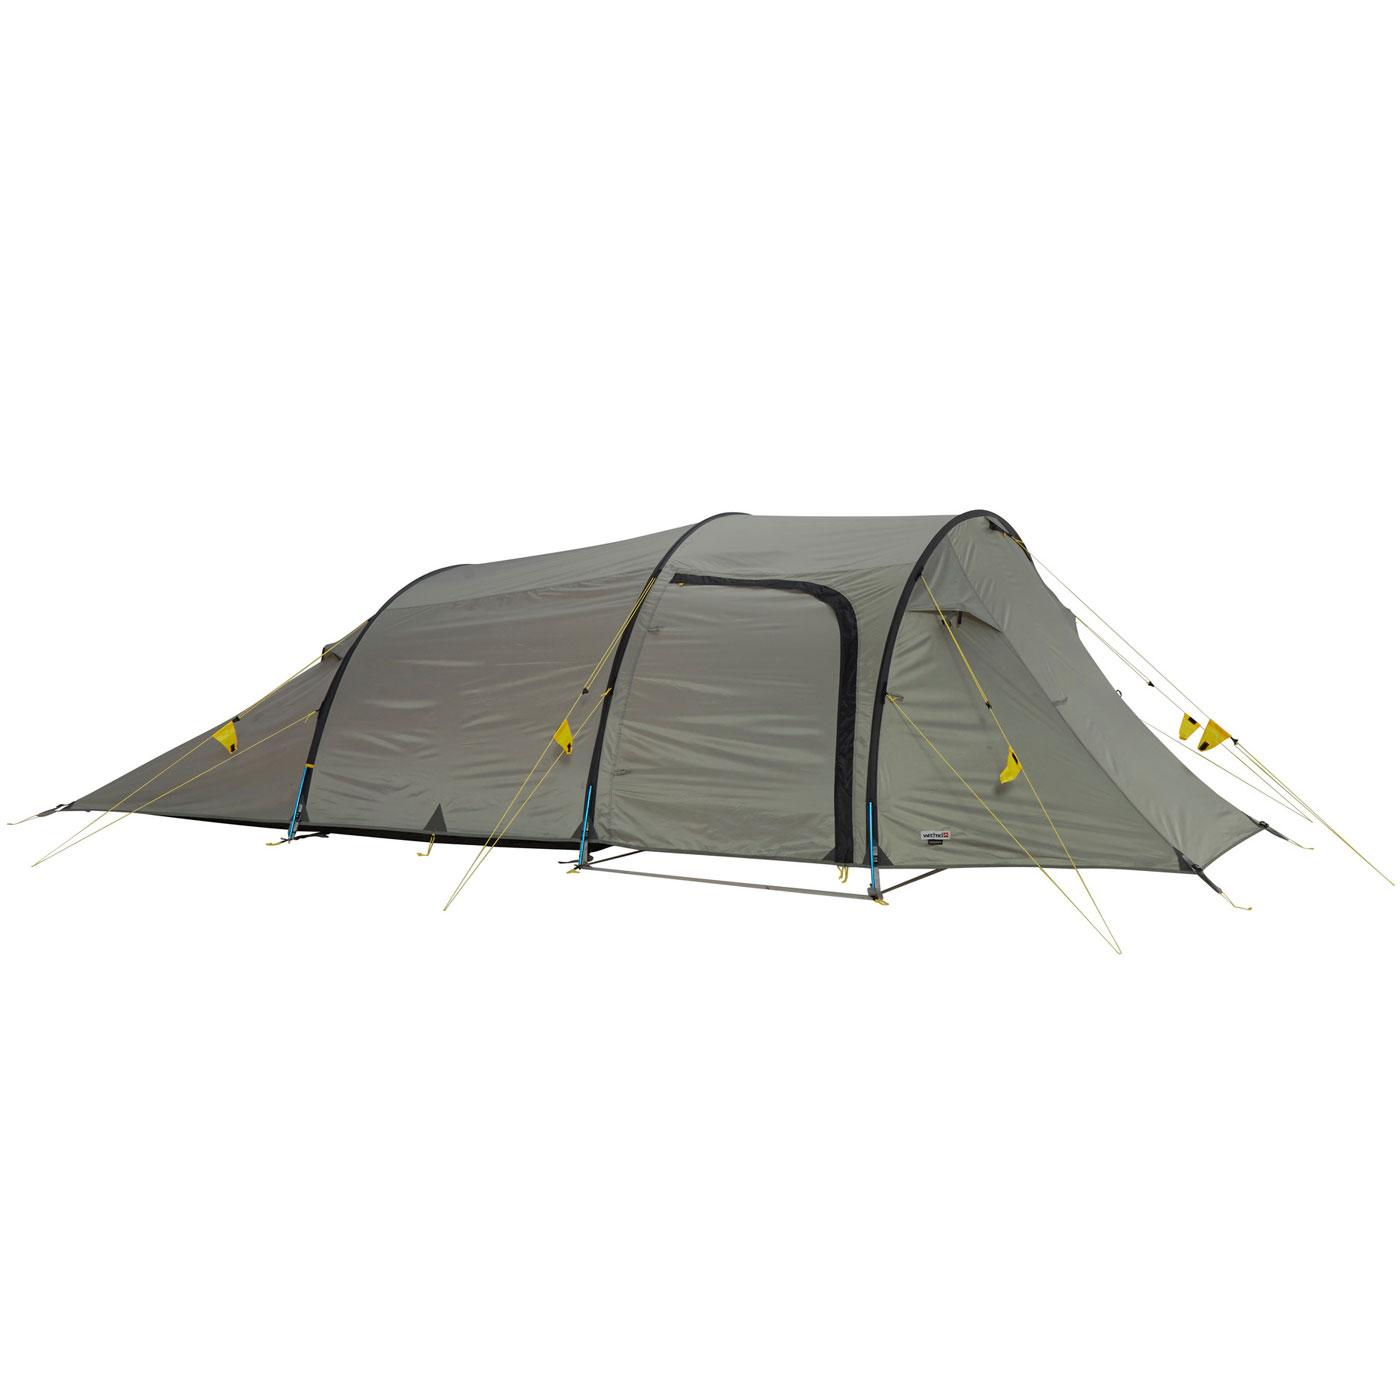 Immagine di Wechsel Intrepid 4 Tenda Campeggio - Laurel Oak